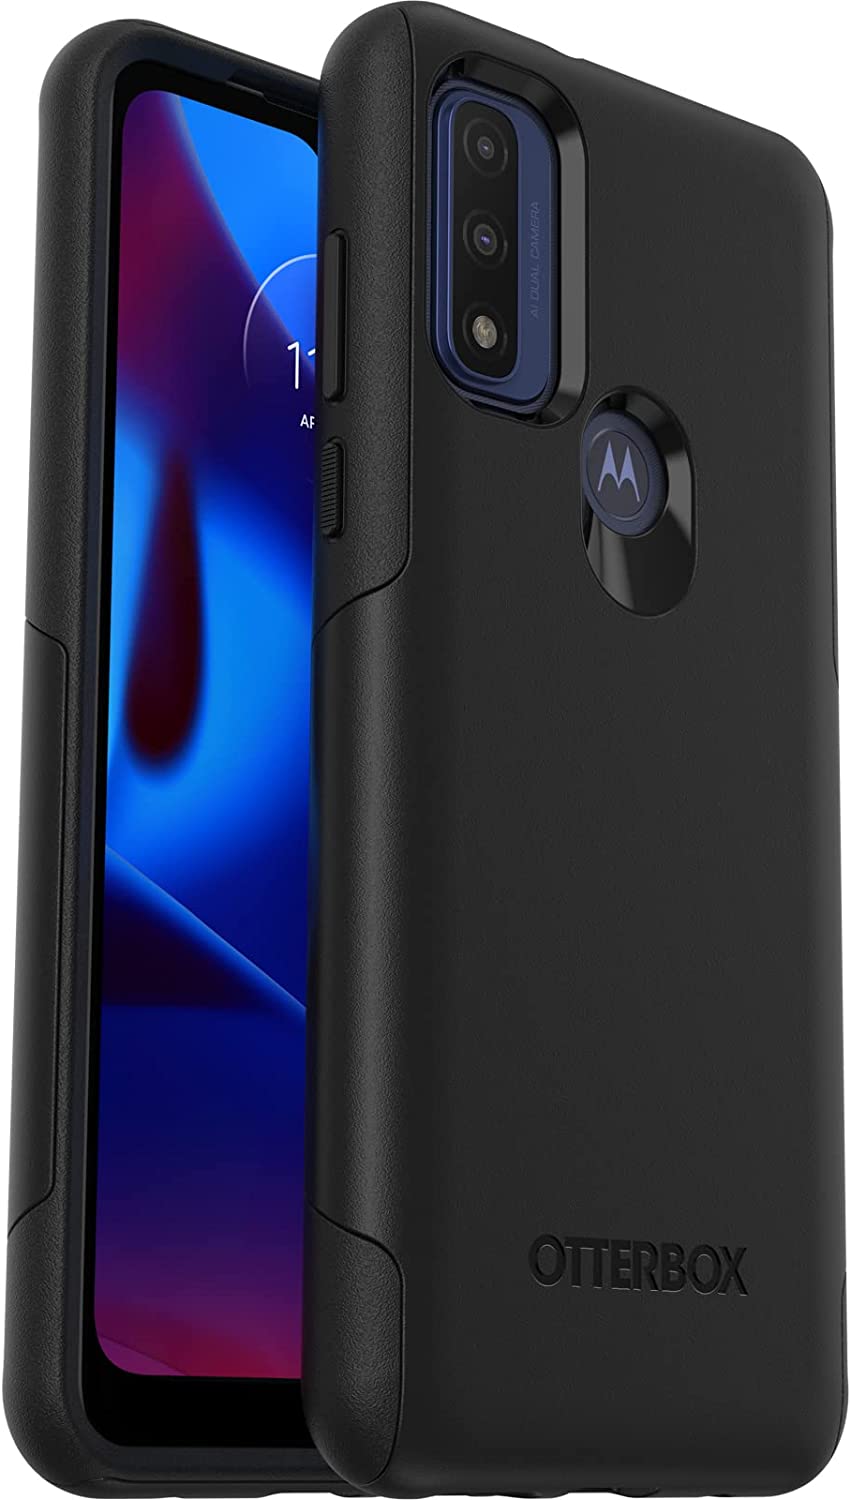 OtterBox COMMUTER LITE Case for Motorola Moto G Pure - Black (Certified Refurbished)